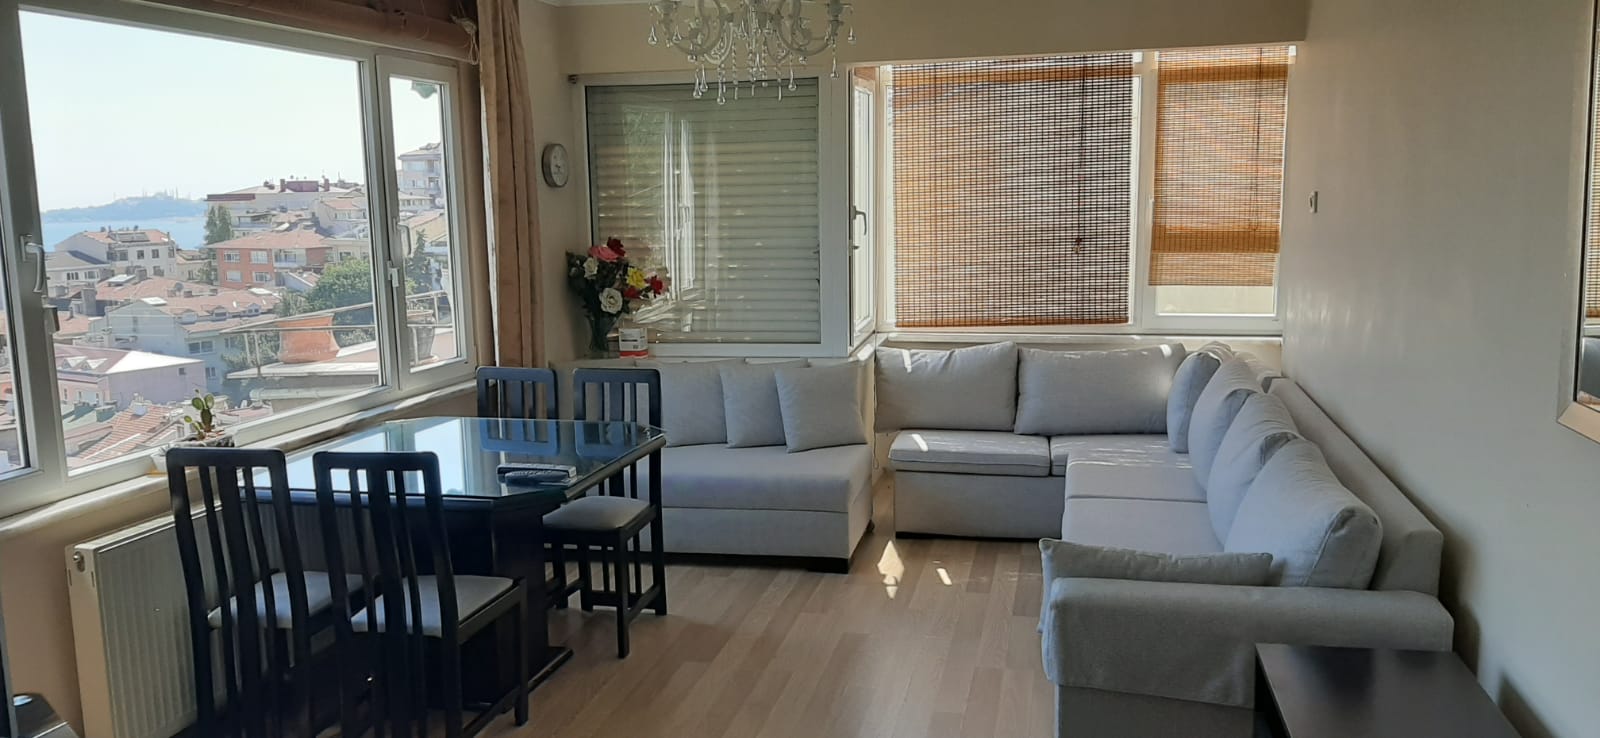 Istanbul-Besiktas-Ciragan-apartment-2-bedrooms-for-rent-3